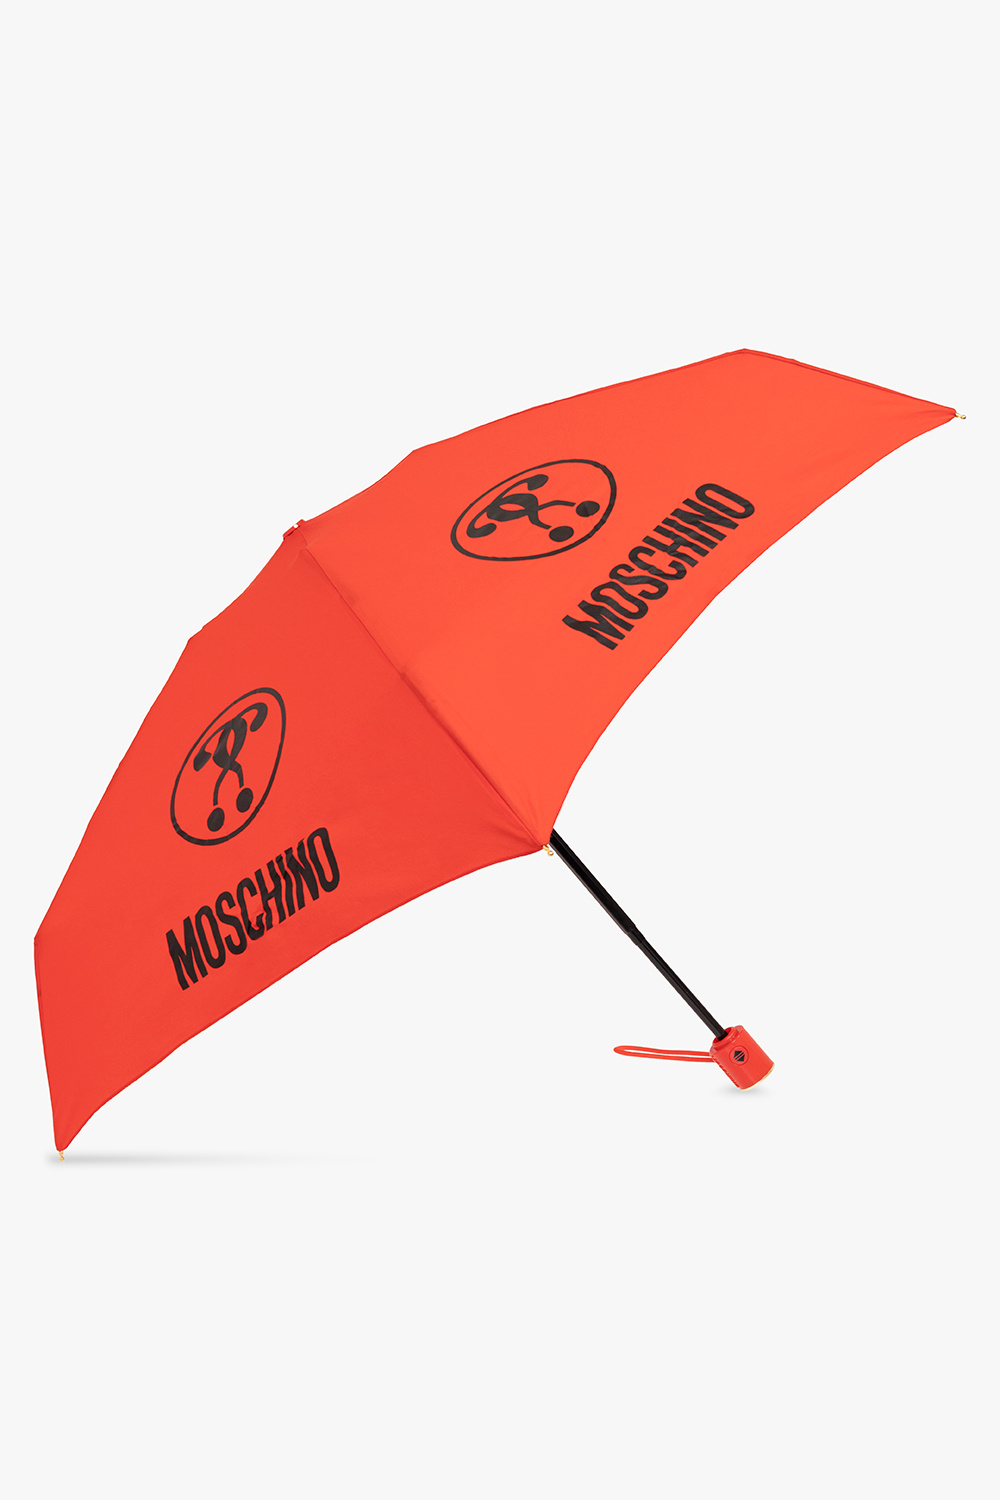 Moschino RED Folding umbrella with logo